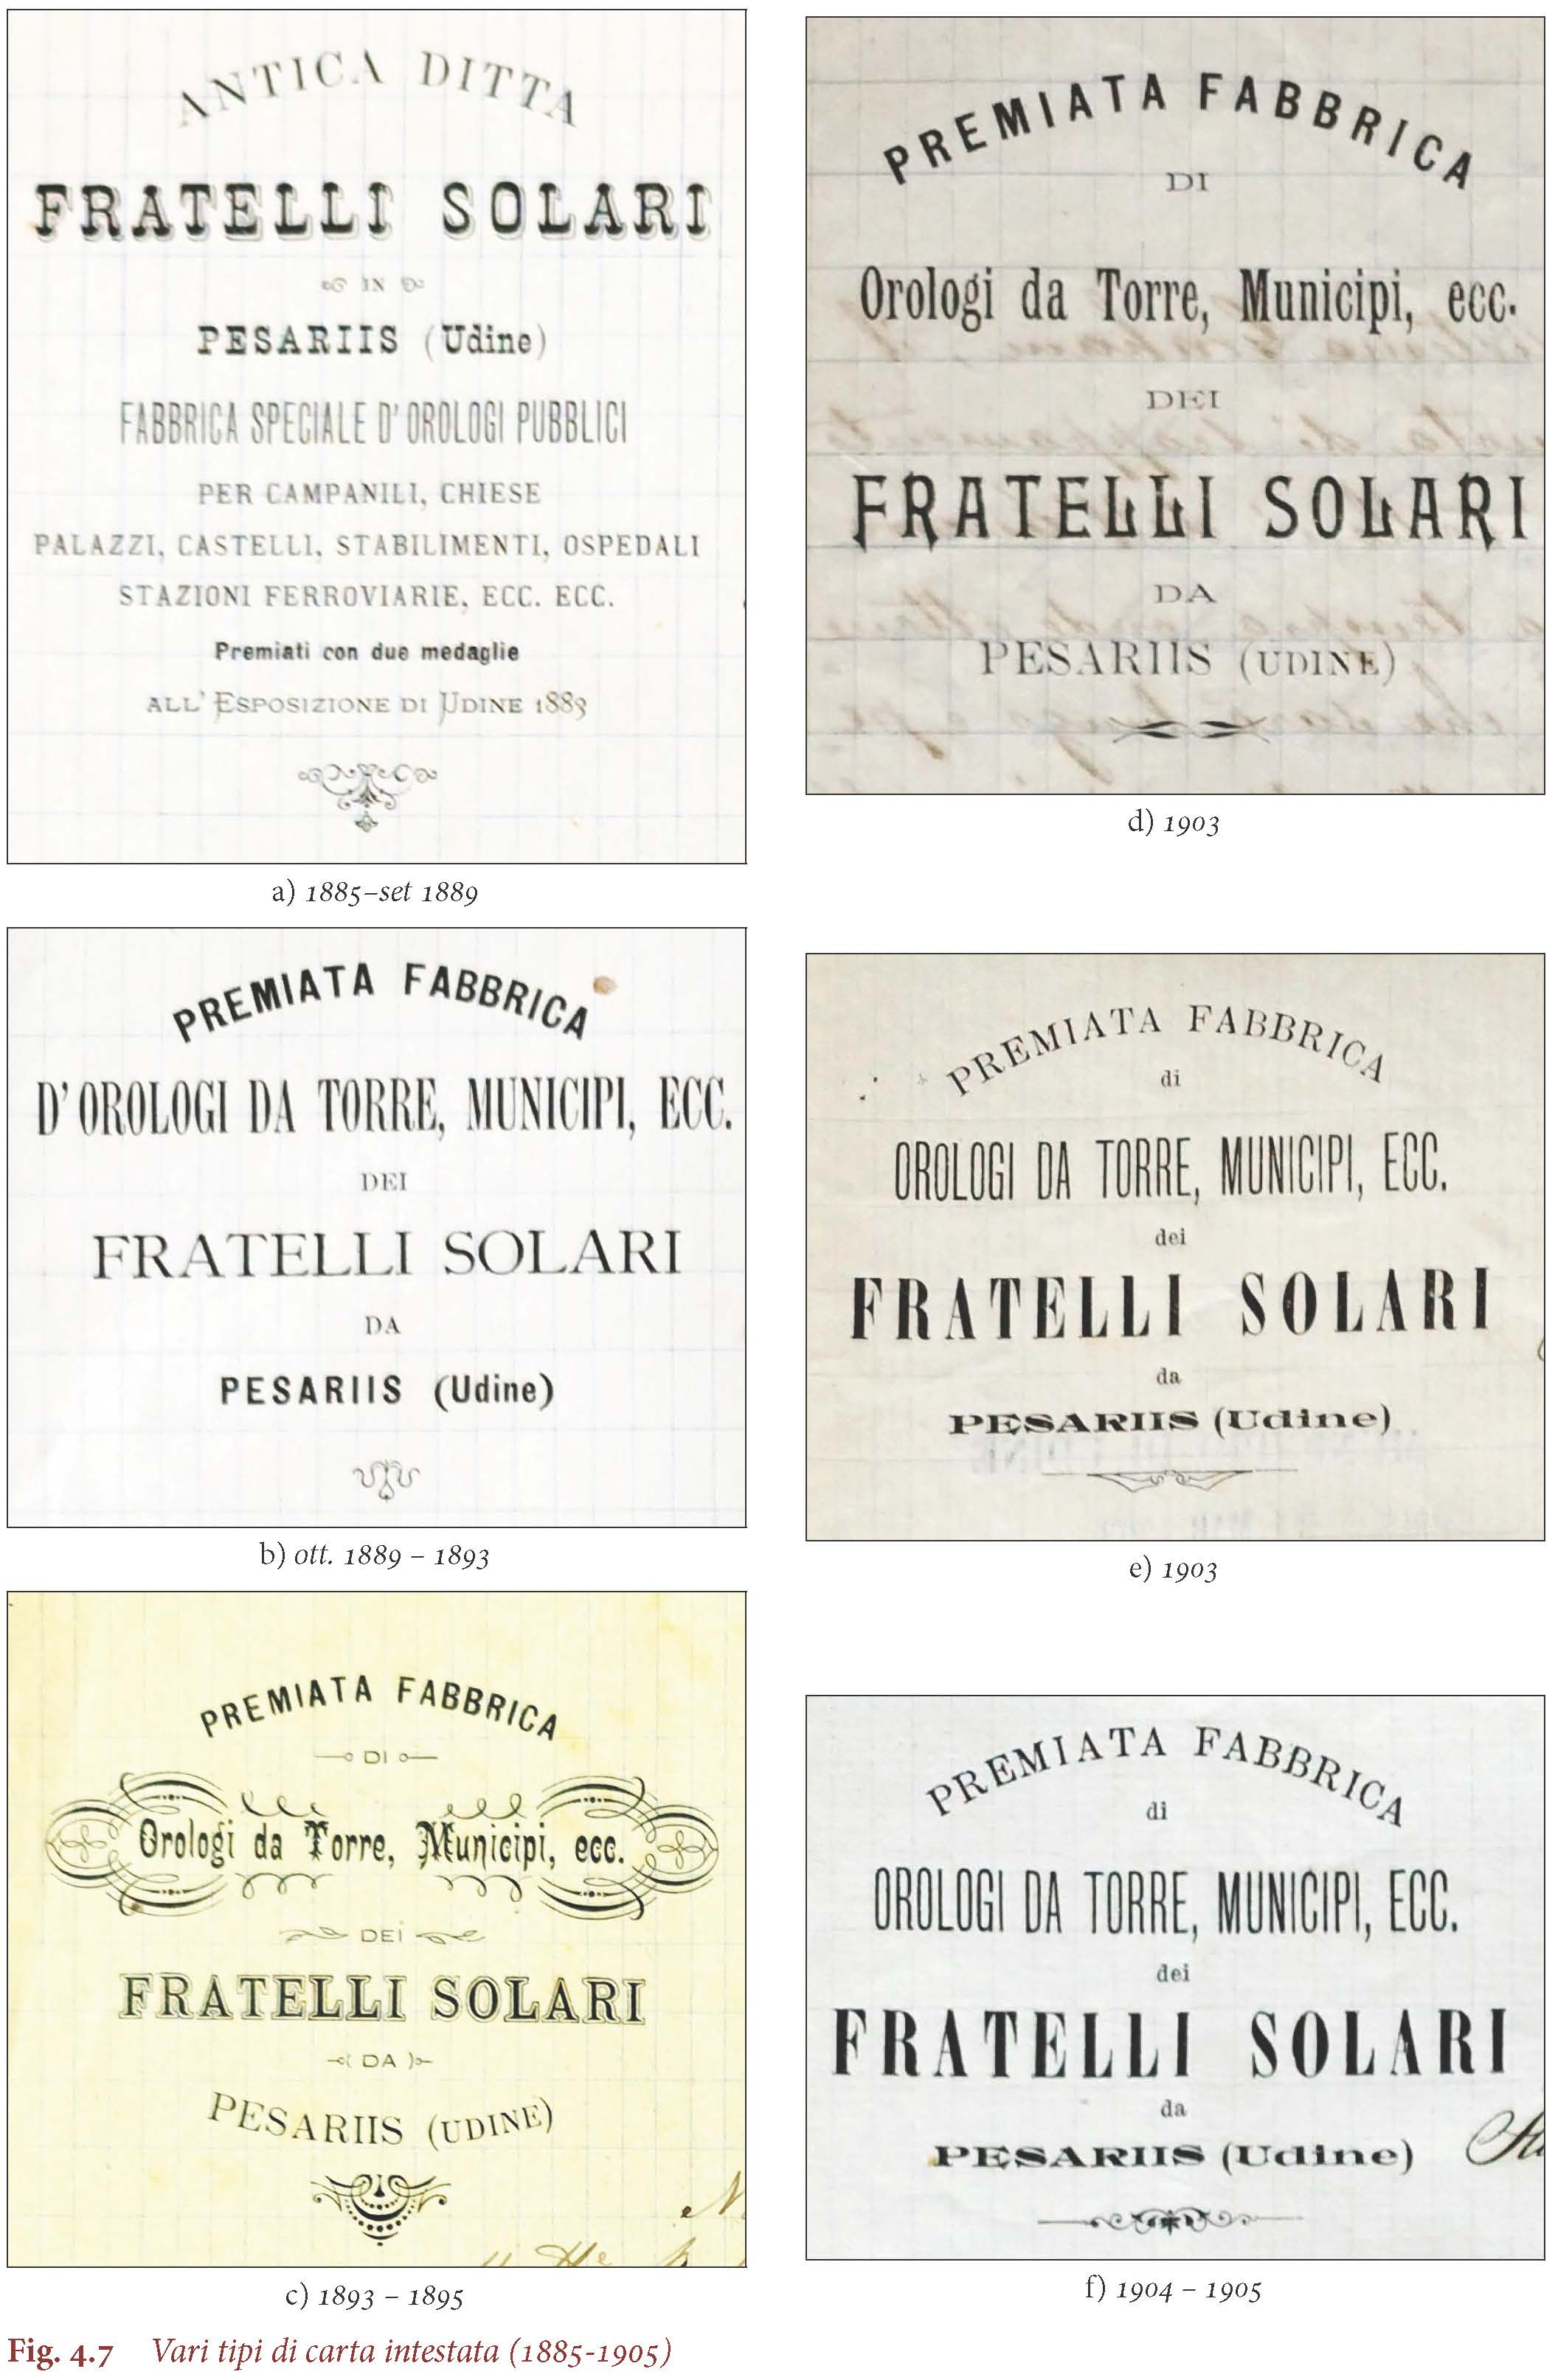 Vari tipi di carta intestata (1885-1905)